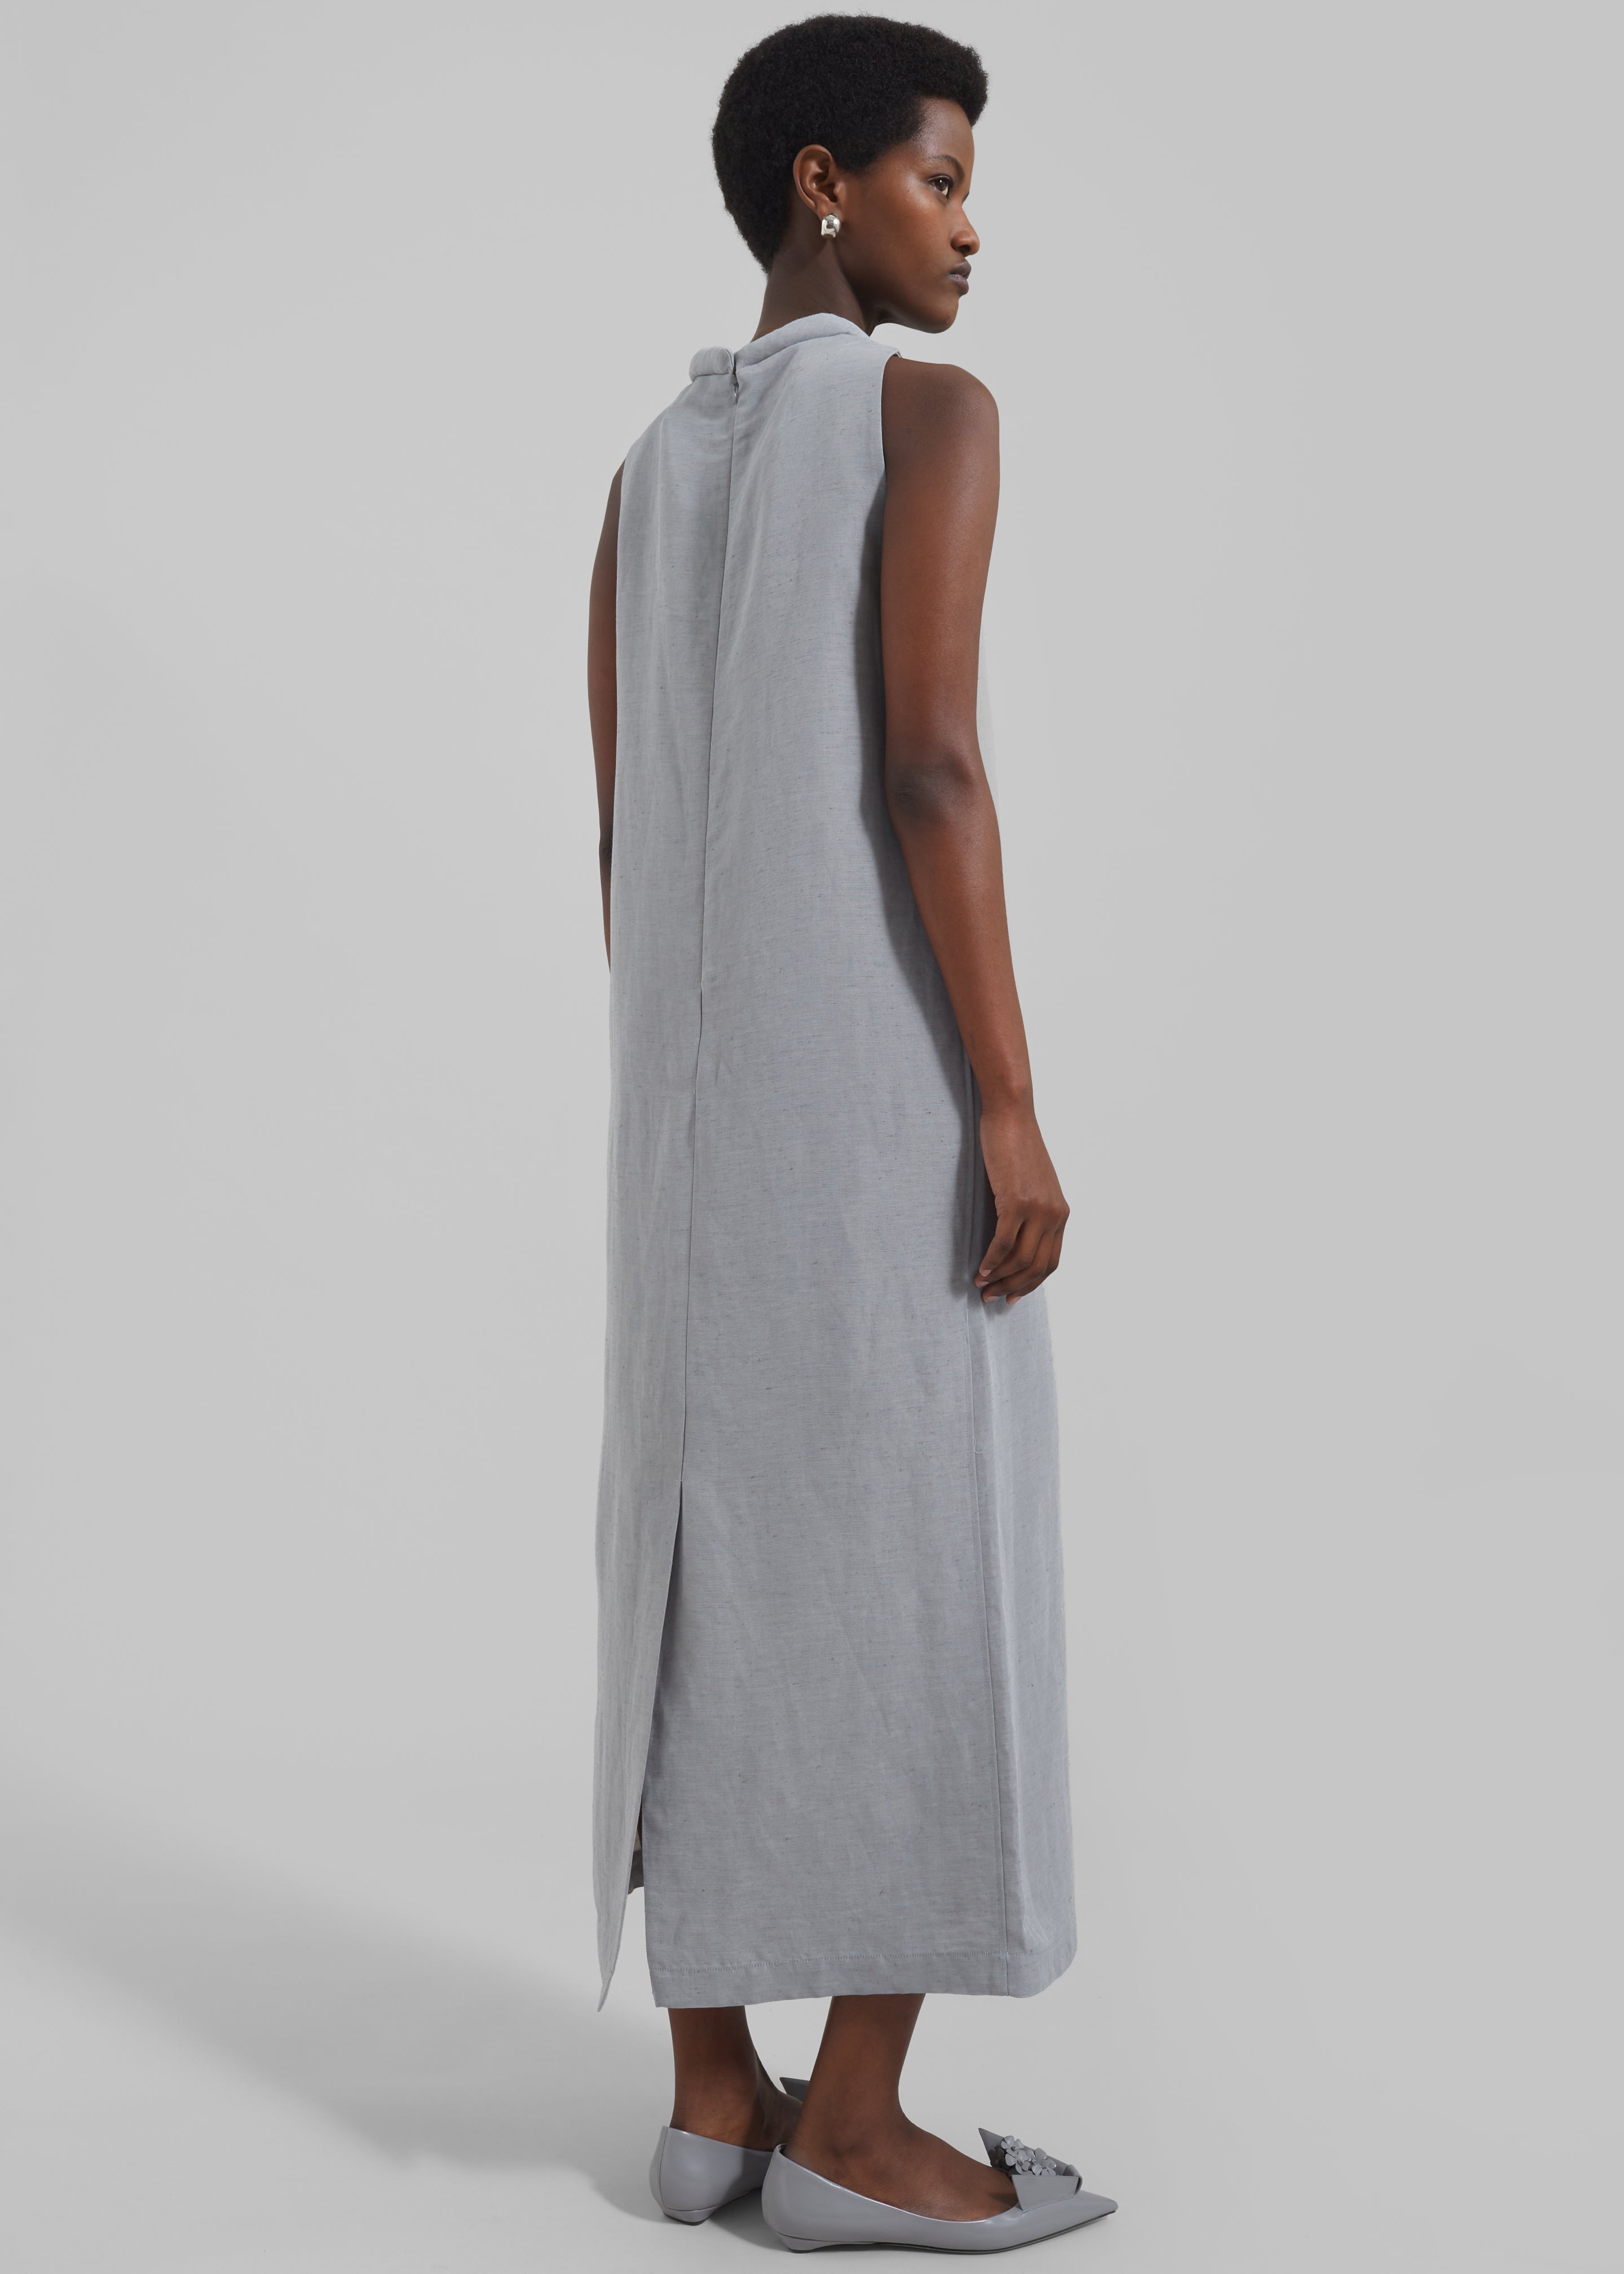 Loulou Studio Rivida Mixed Linen Dress - Pearl Grey Melange - 5